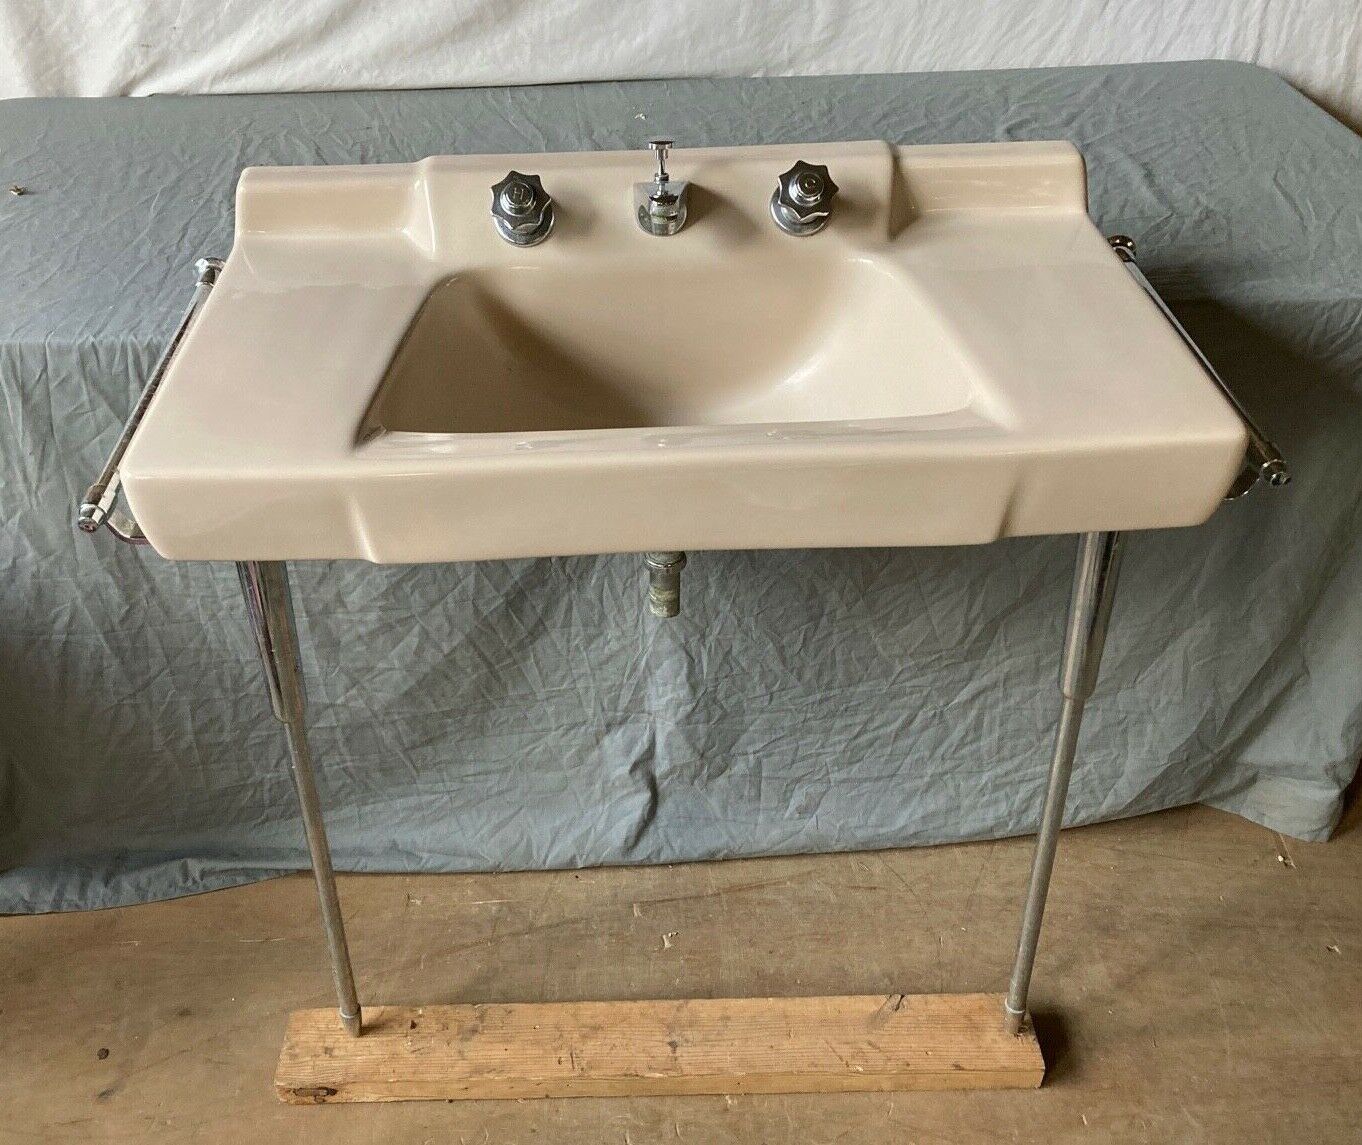 Vtg Mid Century Tan Porcelain Console Bath Sink Chrome legs Towel Bars 443-21E